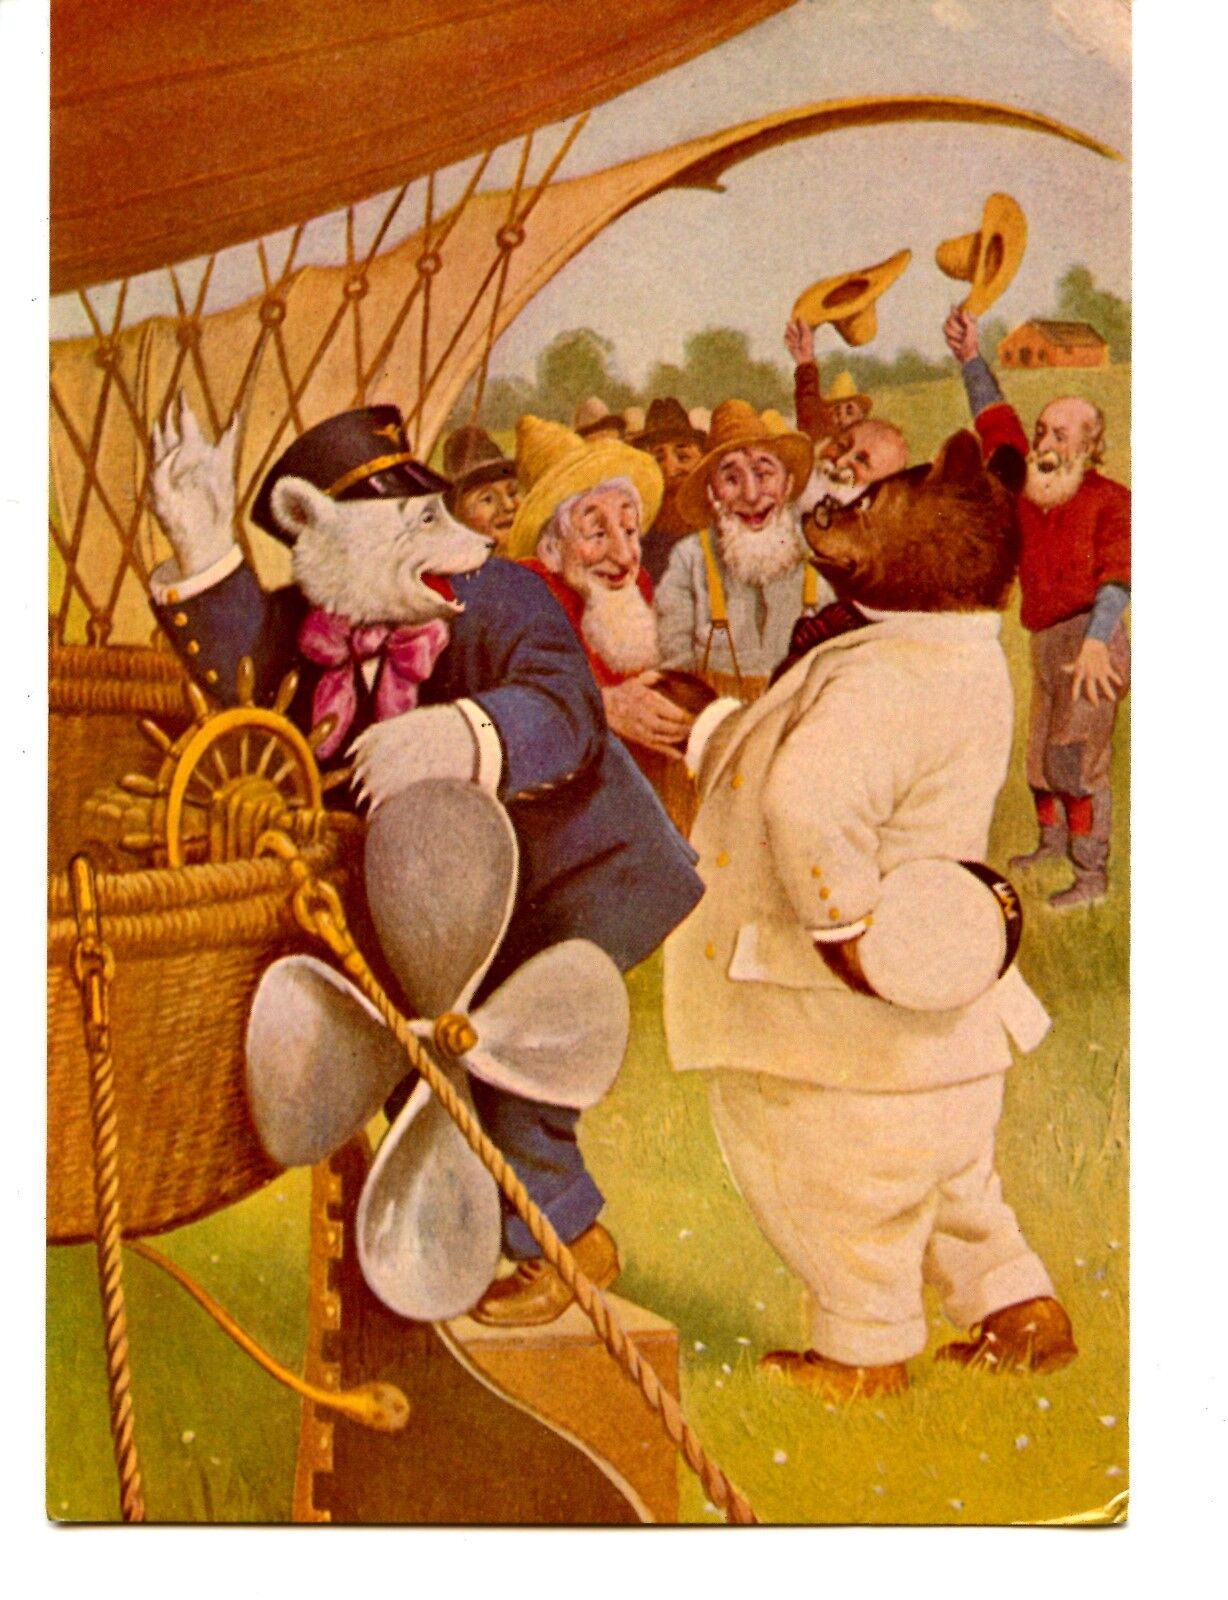 Dressed Roosevelt Bears Aloft-Hot Air Balloon-Cute Culver Artwork-1984 Postcard